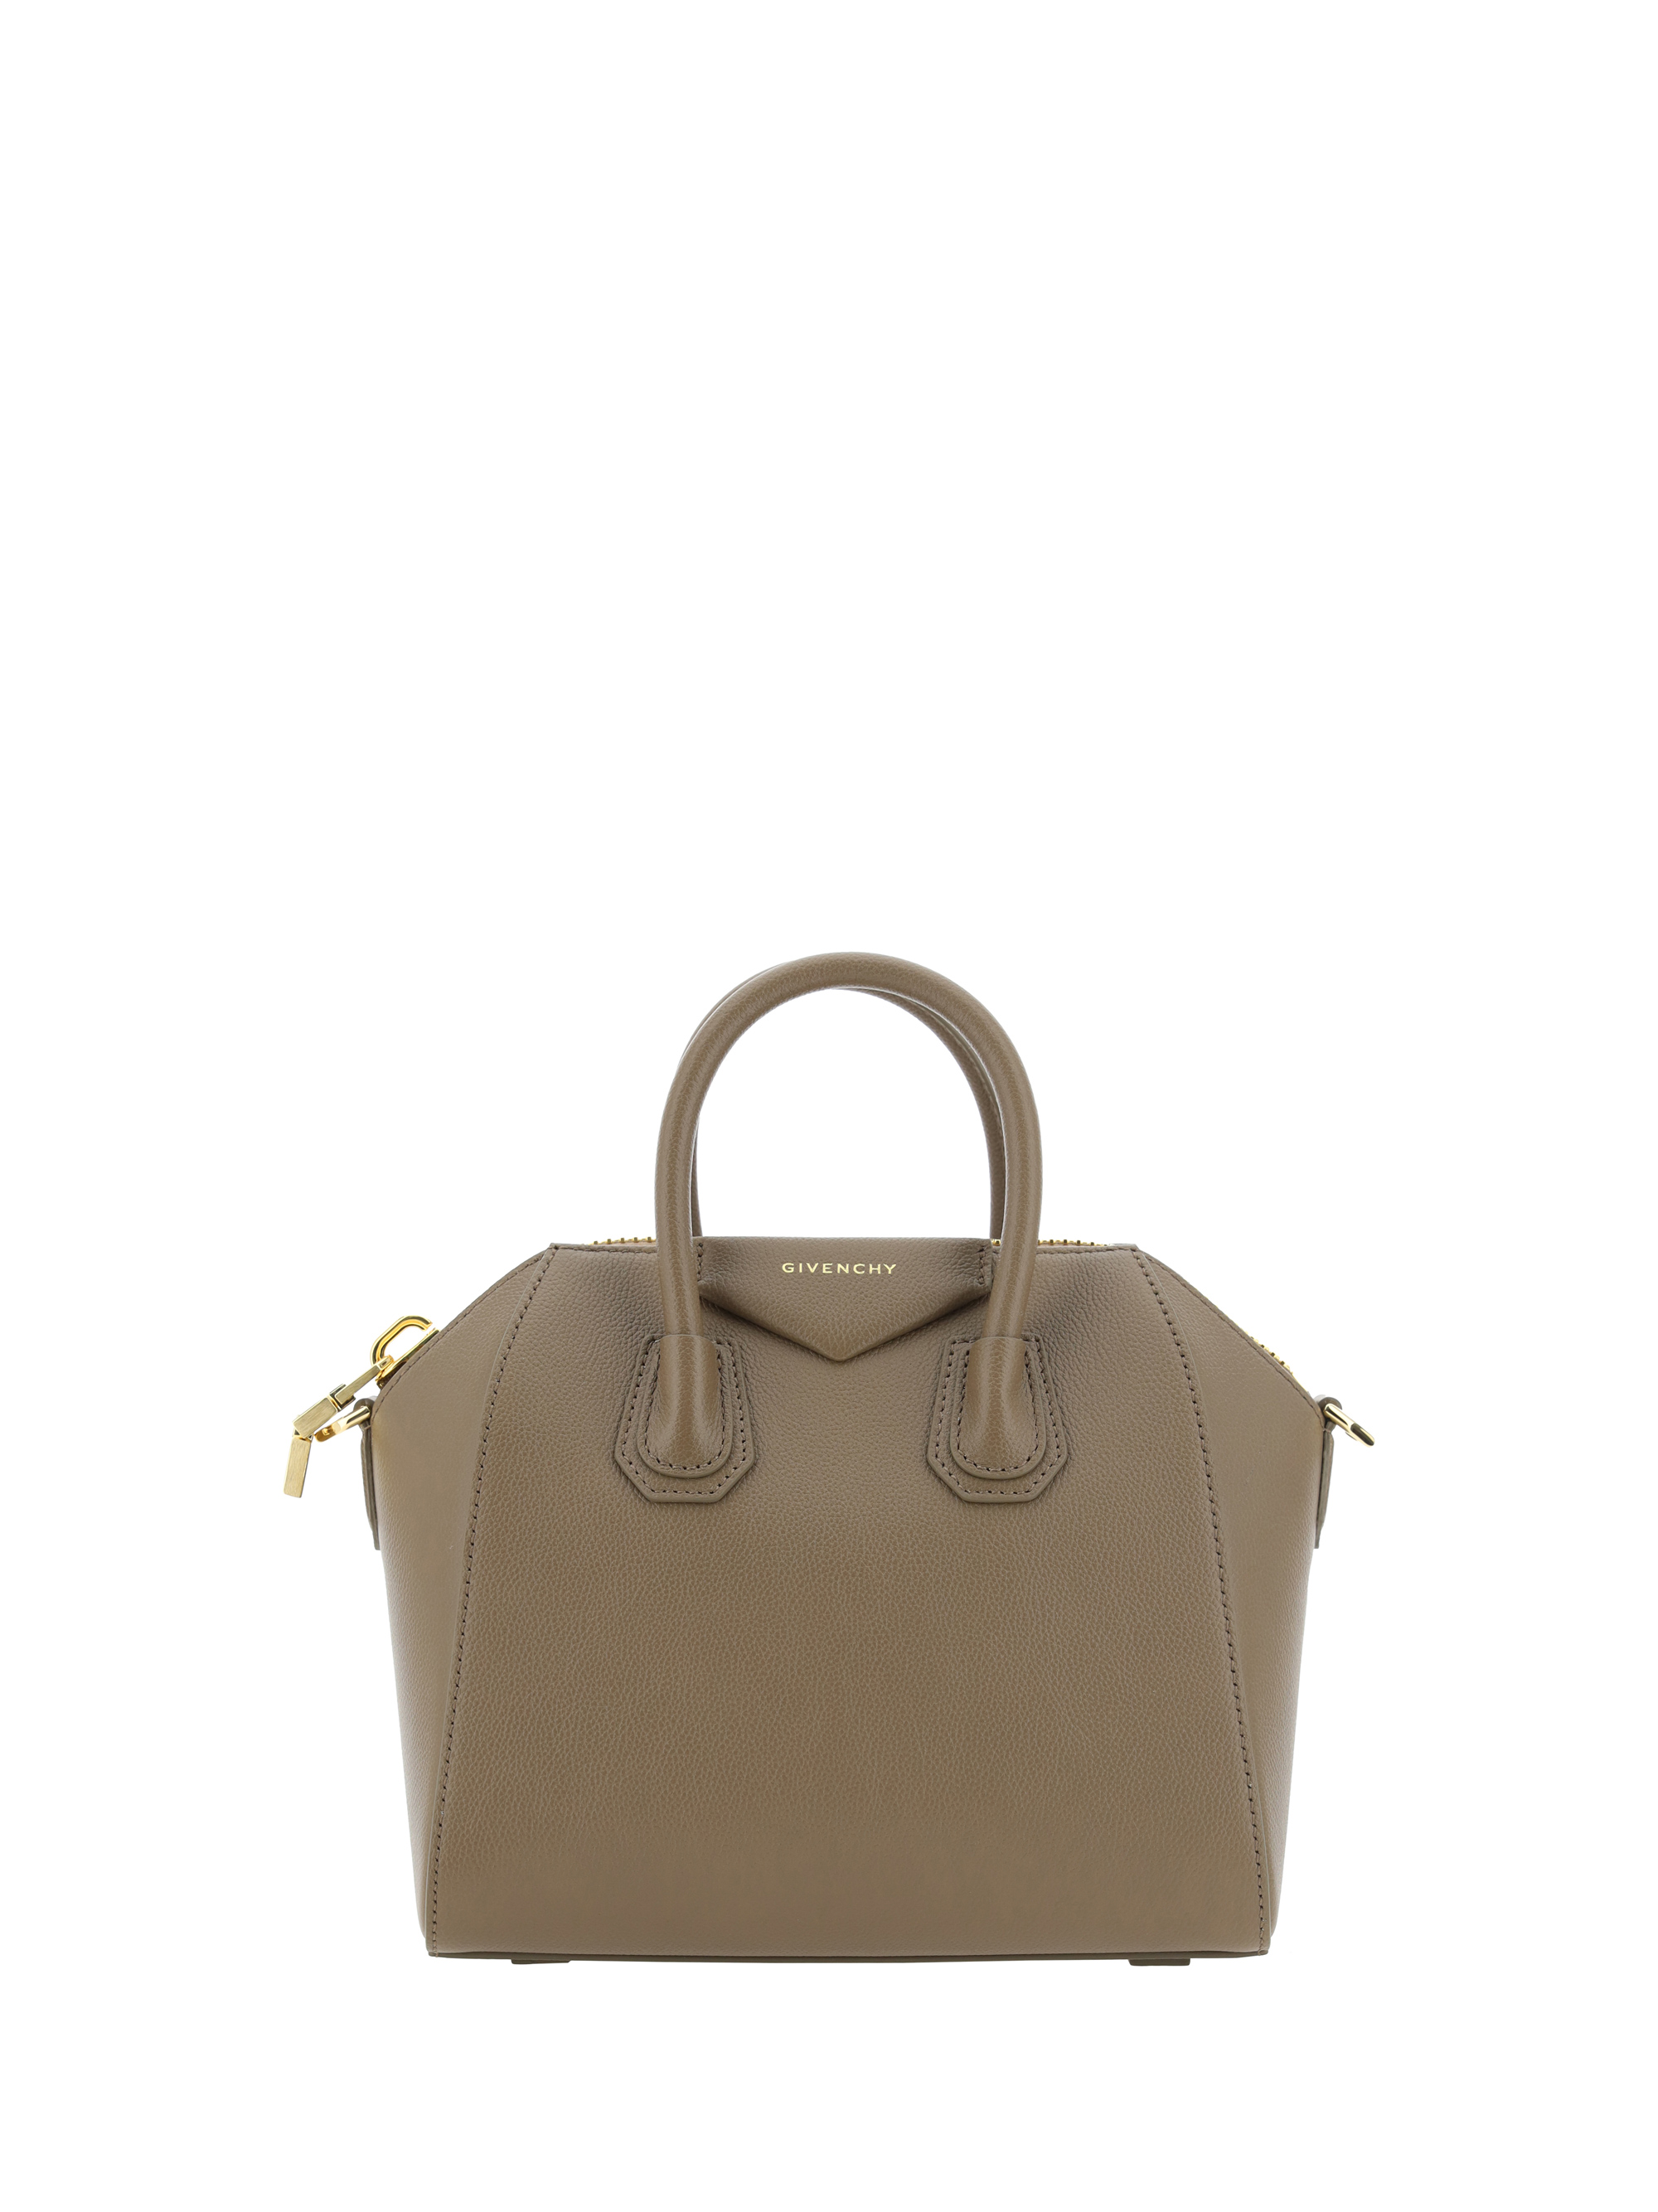 Givenchy Antigona Handbag In Taupe